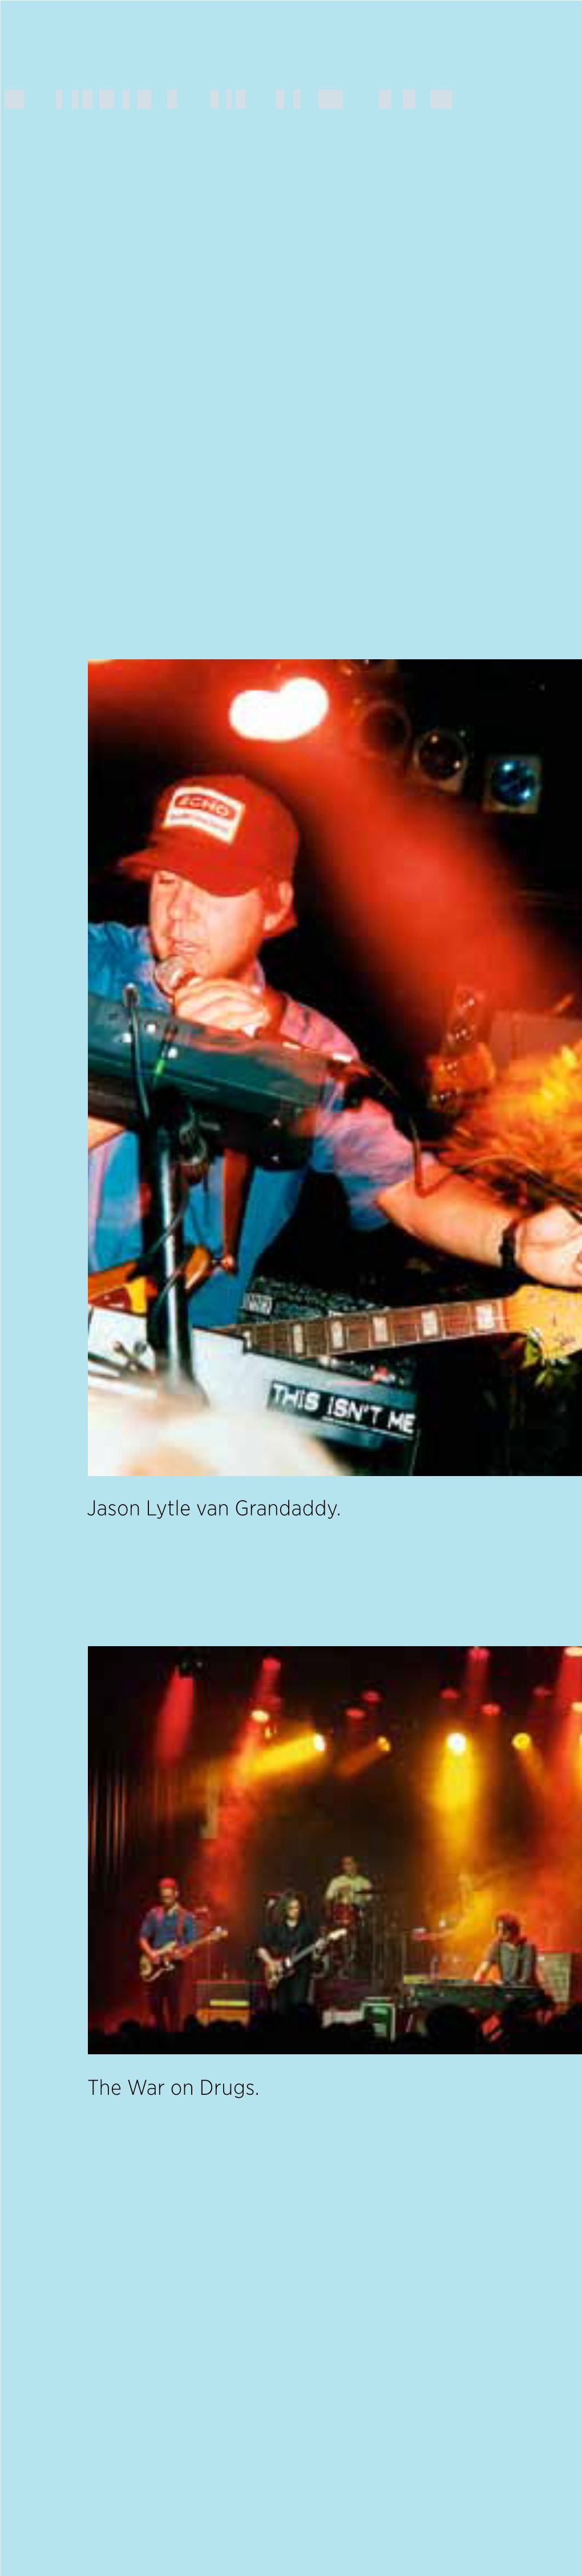 Jason Lytle Van Grandaddy. the War on Drugs